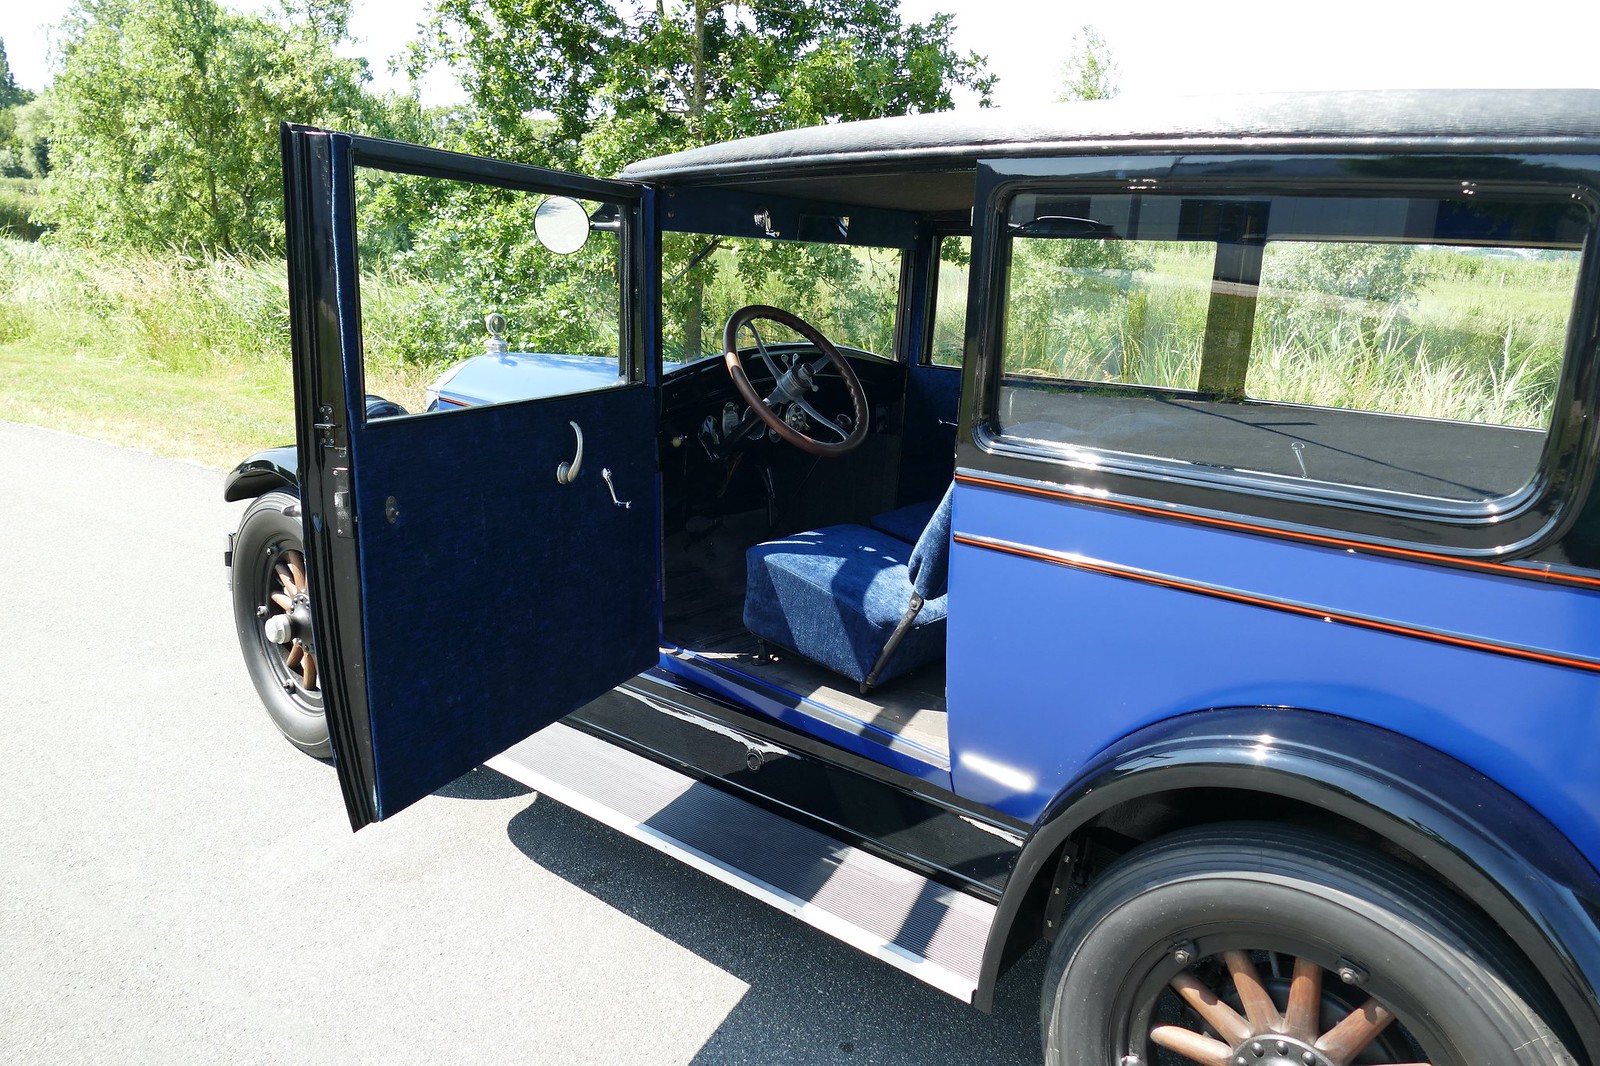 Buick Standard Six Sedan 1927